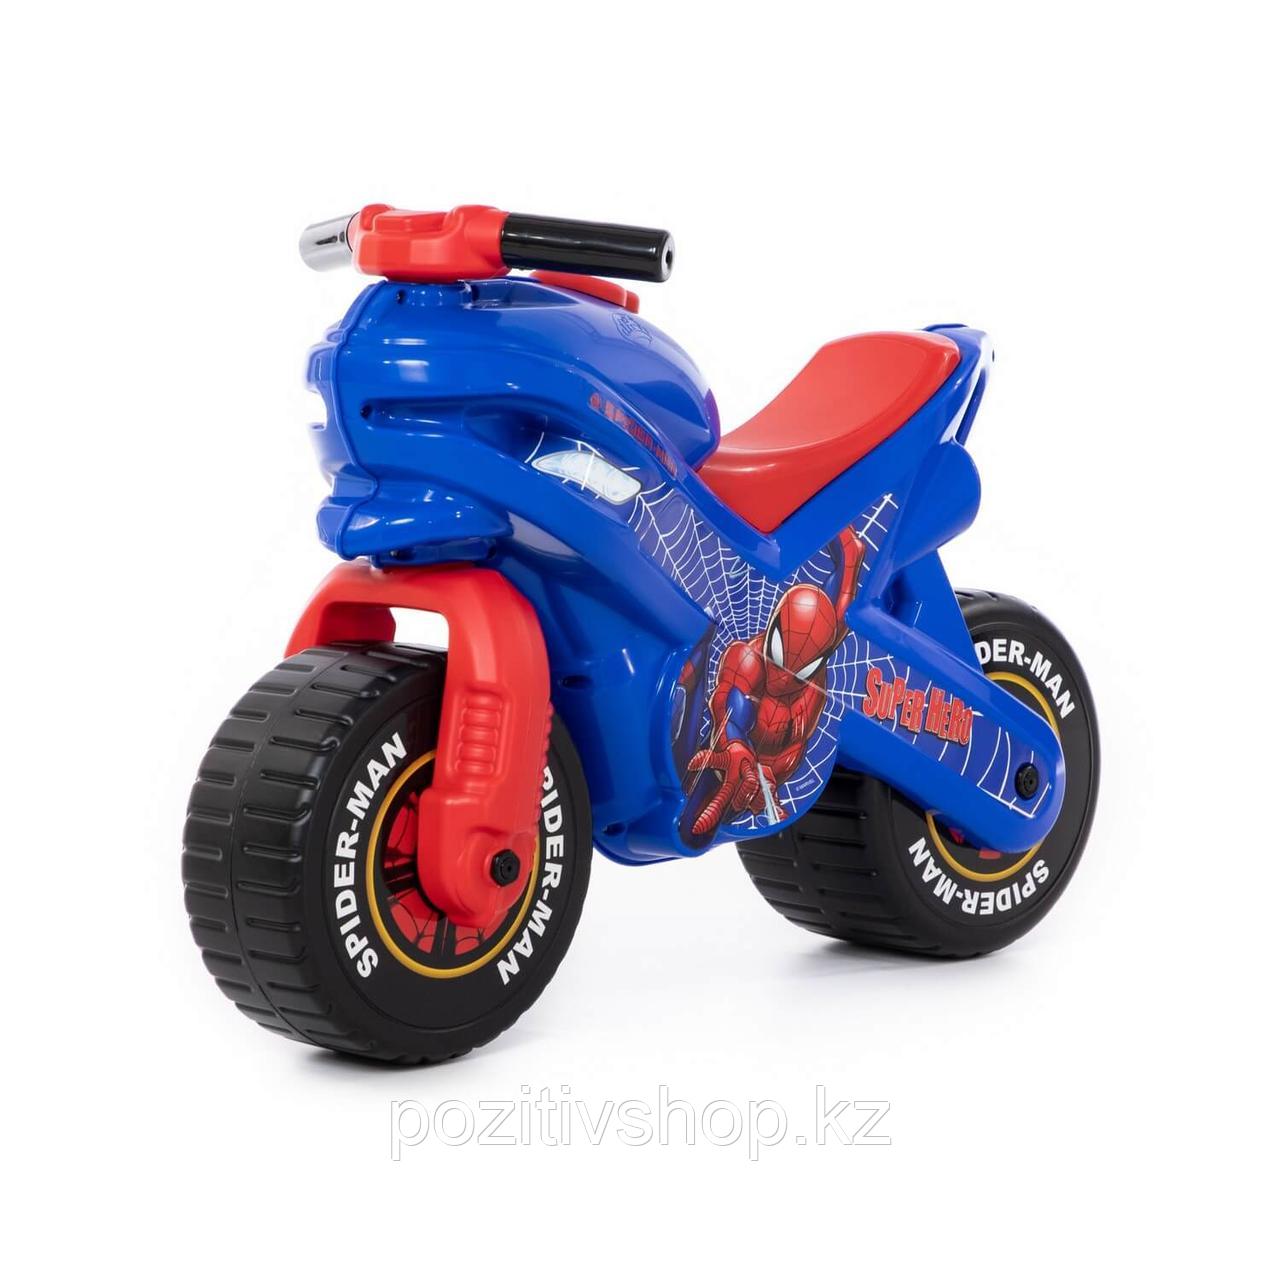 Детский Мотоцикл Marvel Человек-паук